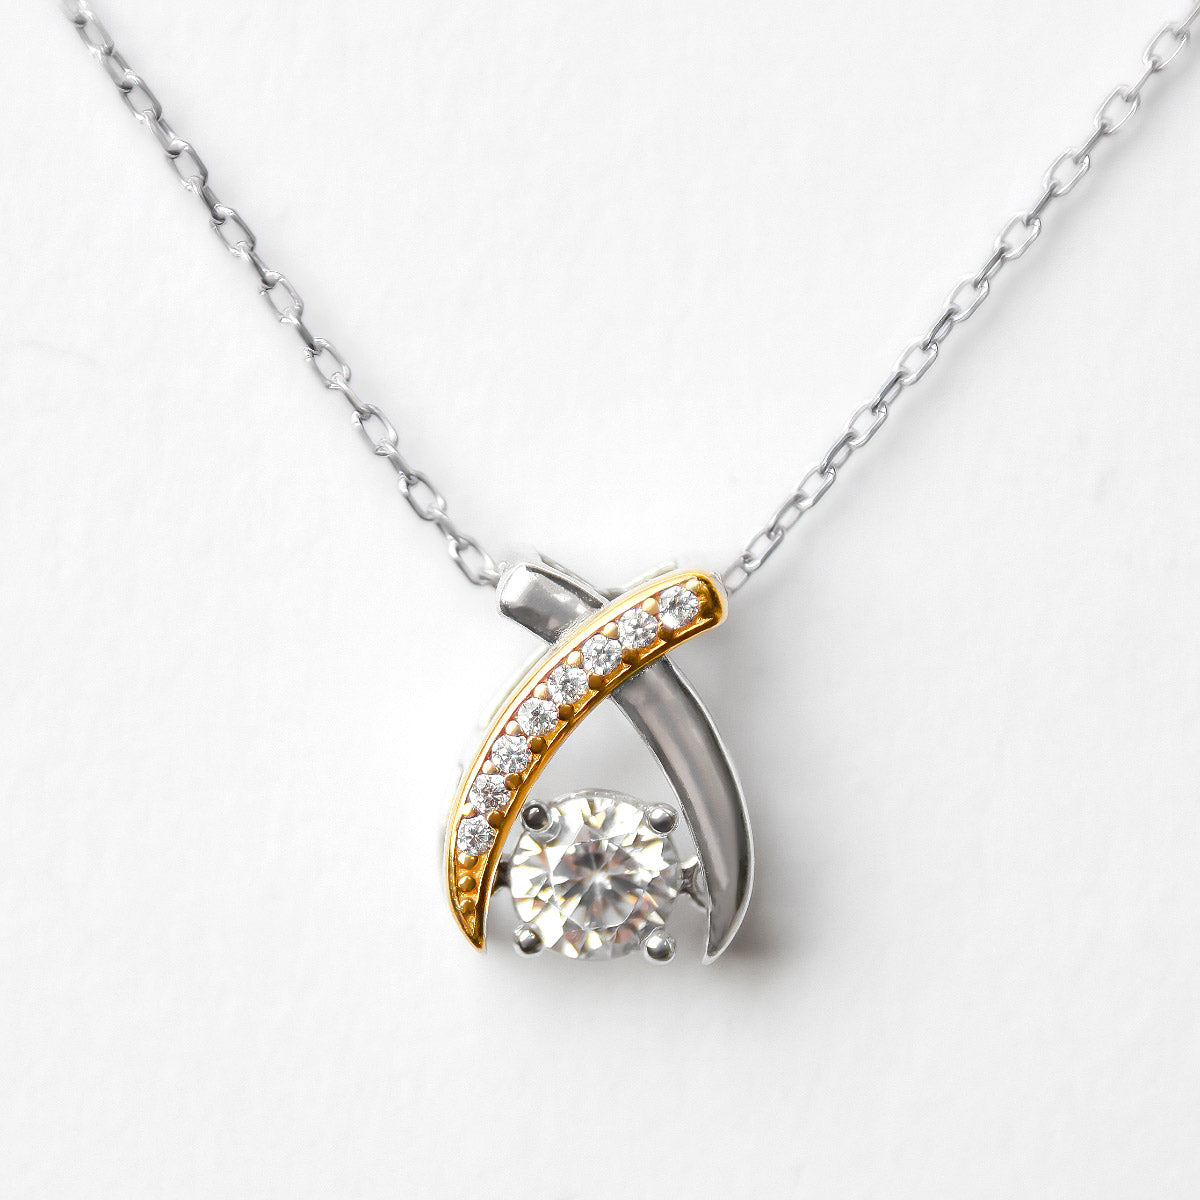 Make a Wish - Dancing Crystal Wishbone Necklace Gift Set